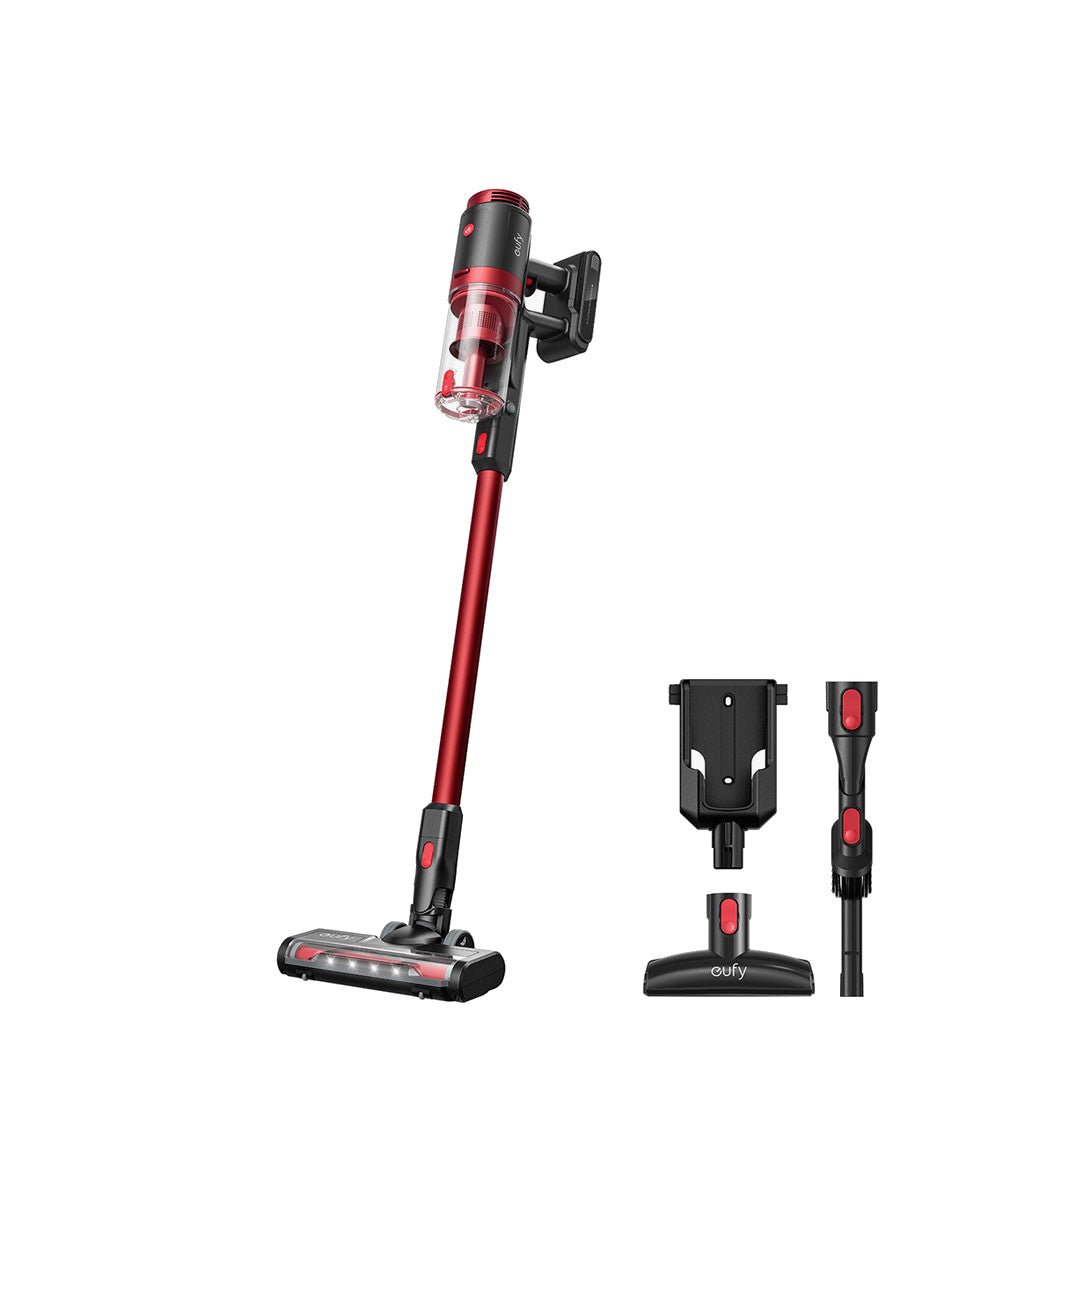 Eufy HomeVac S11 Lite Cordless Stick Vacuum Cleaner - Red T2503K91 - Level UpEufyVacuum Cleaner194644076184